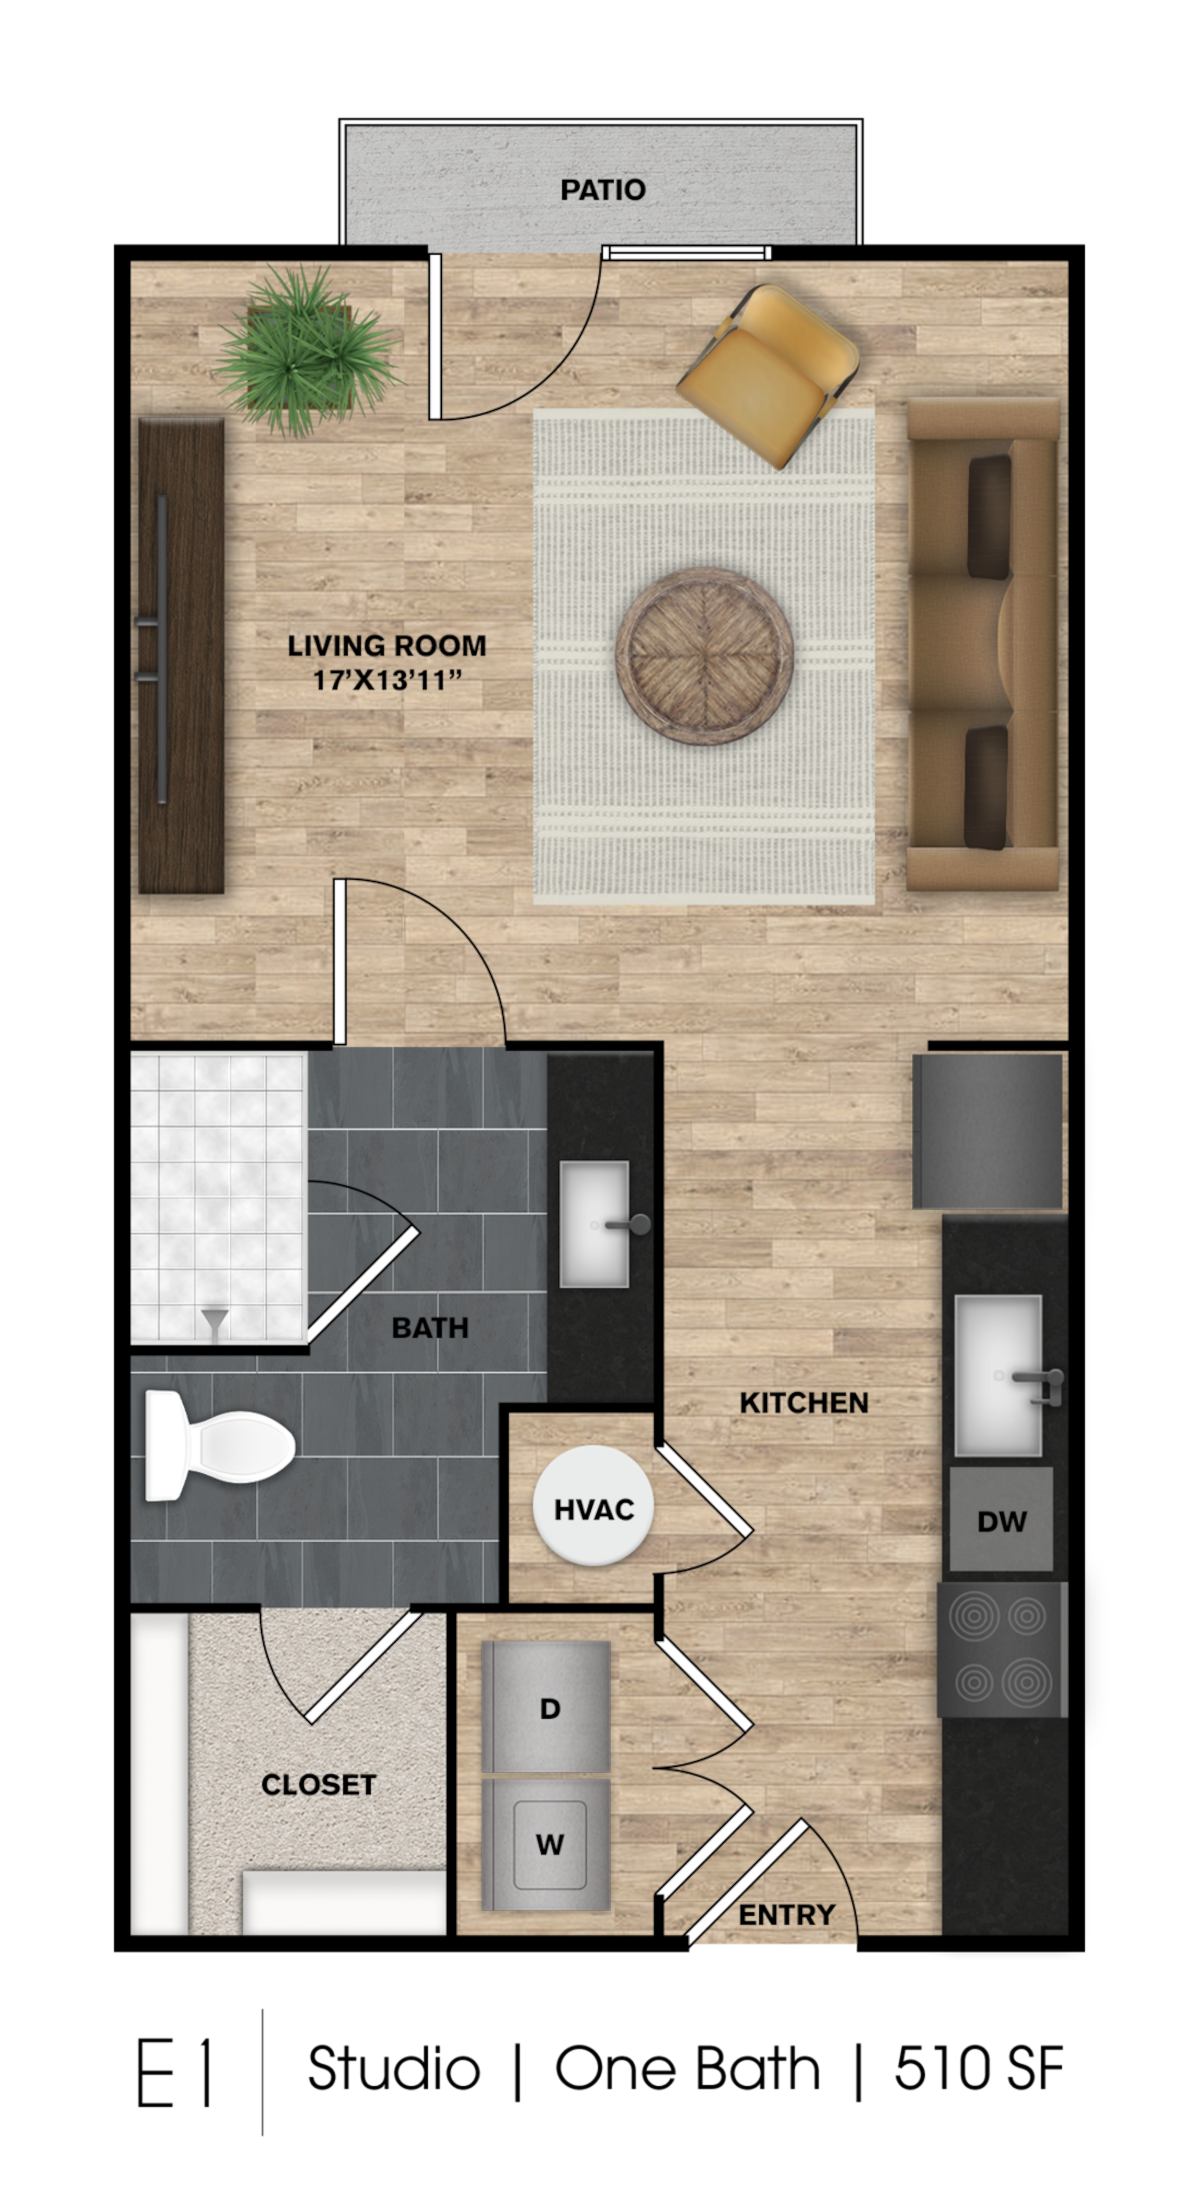 Floorplan diagram for E1, showing Studio